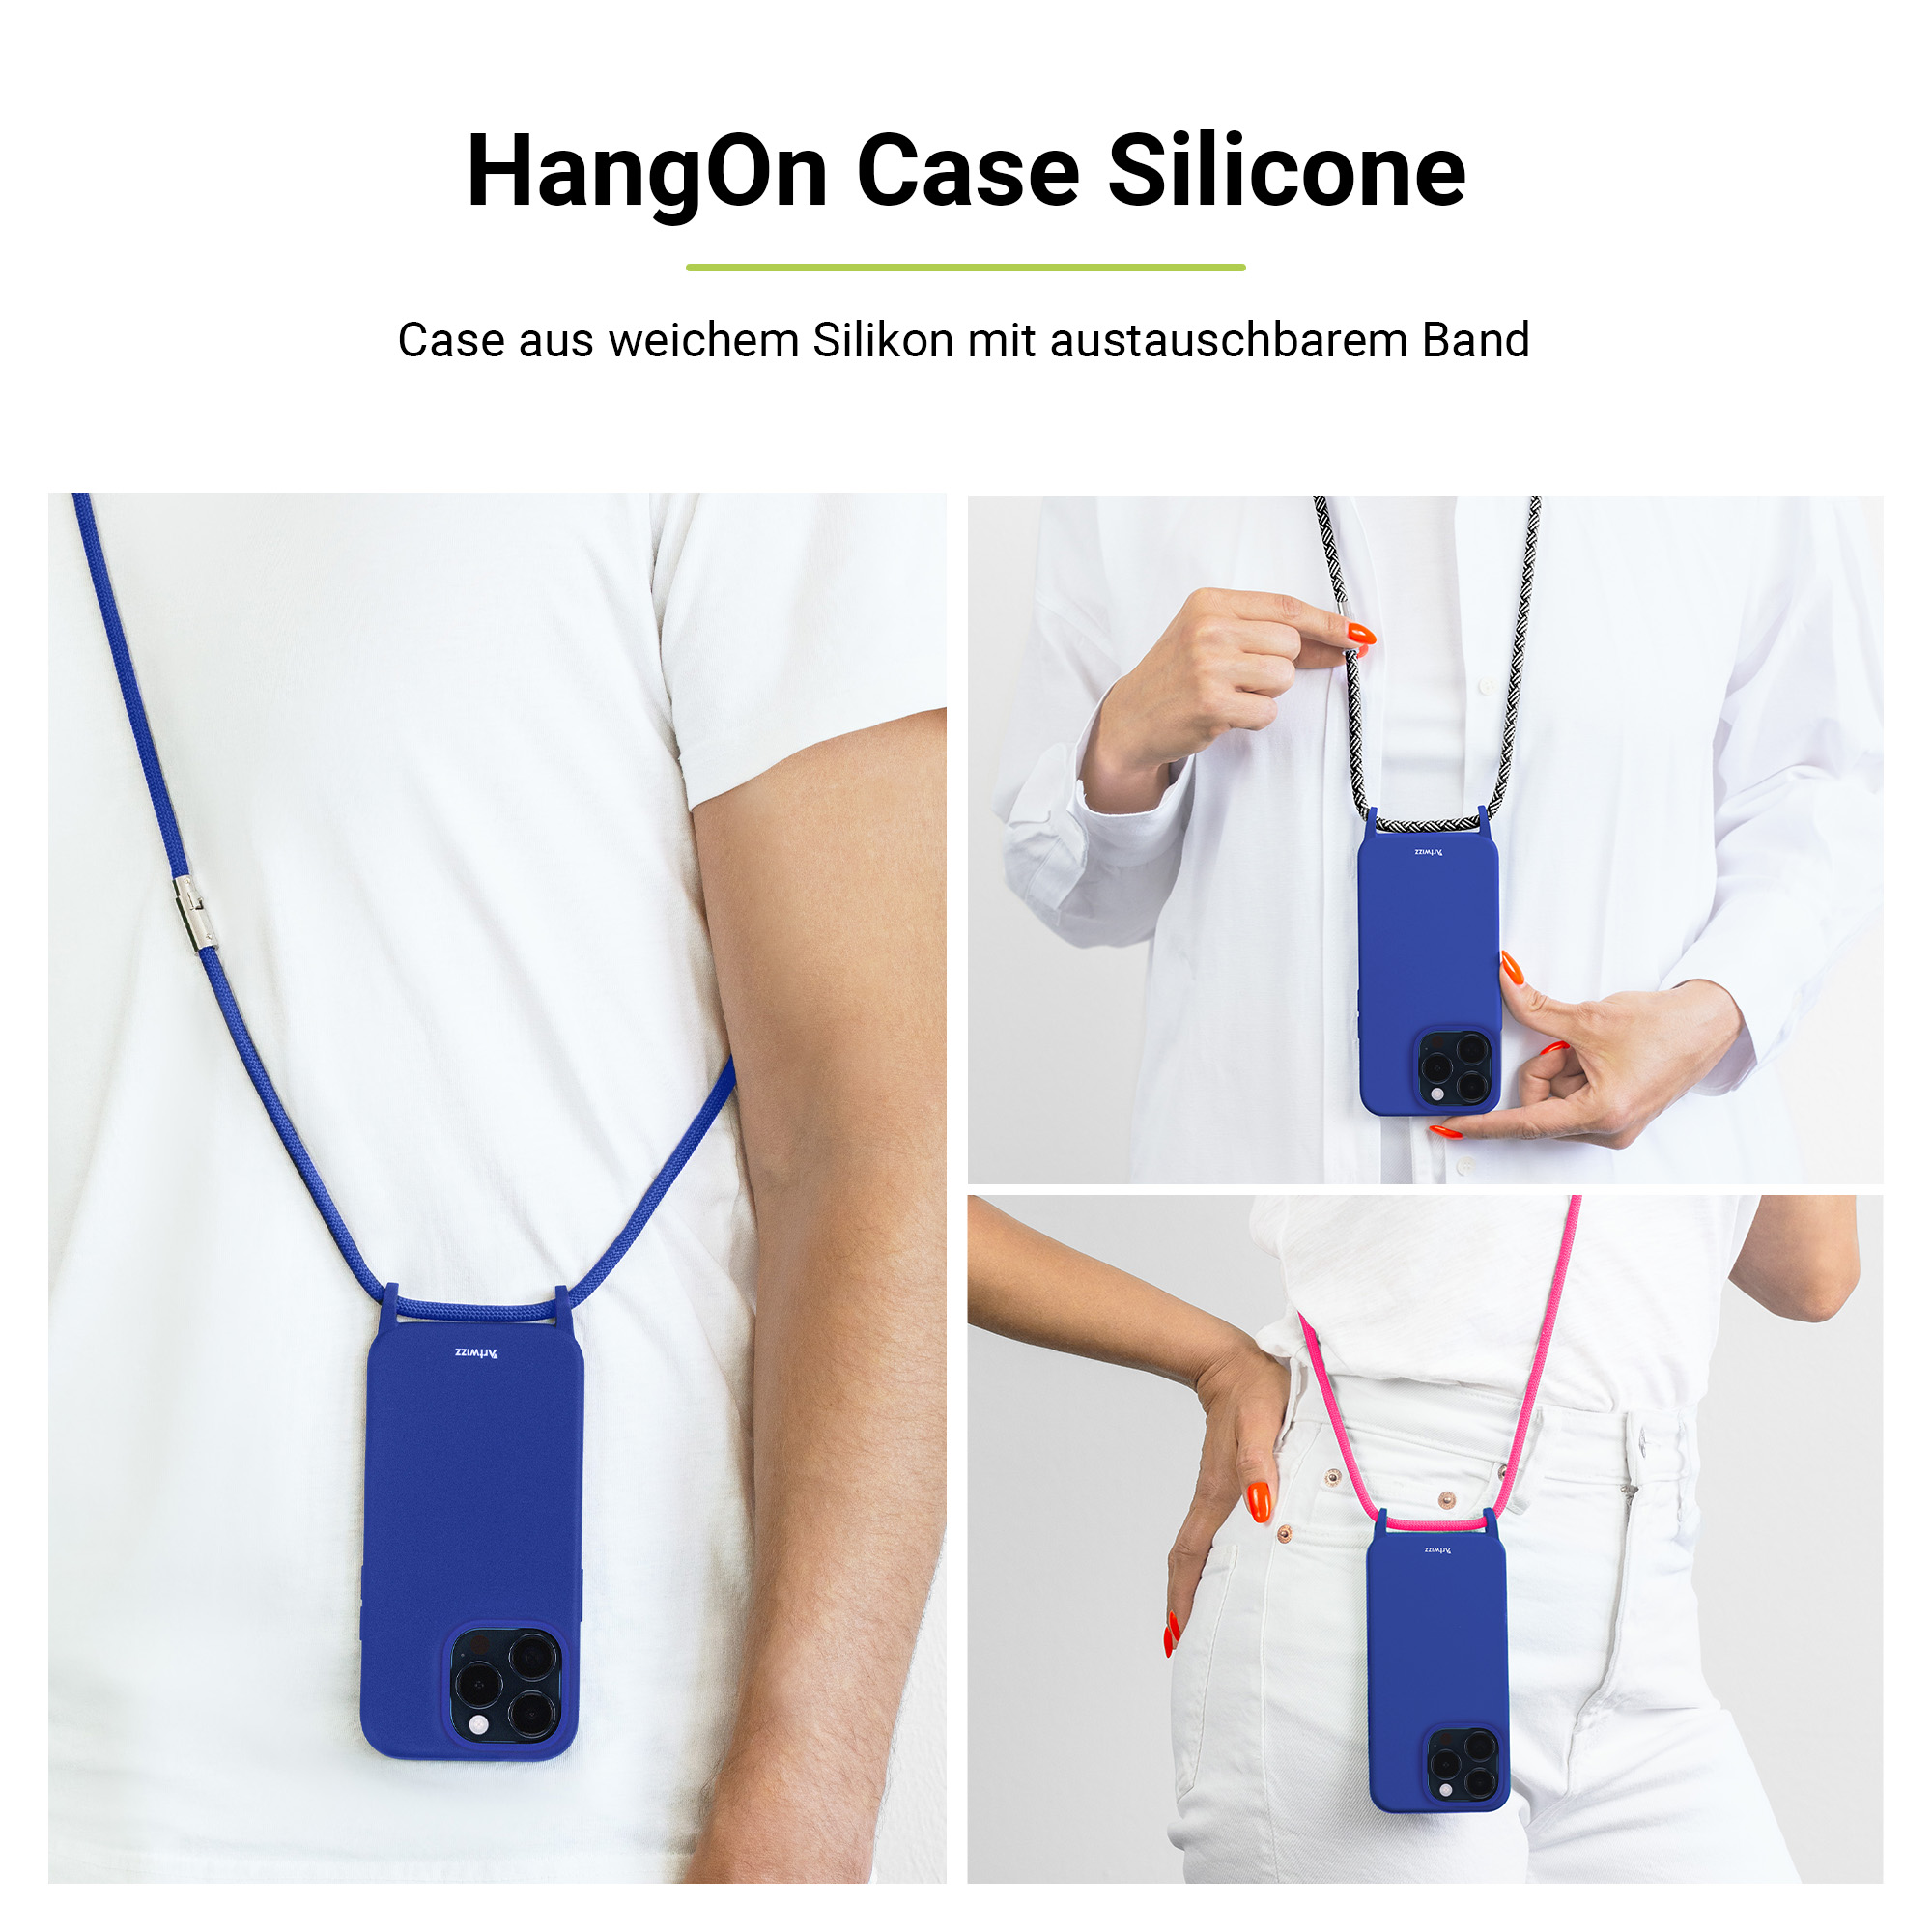 ARTWIZZ HangOn Case Silicone +CHARGE, 15 Apple, Umhängetasche, Blau Pro, iPhone